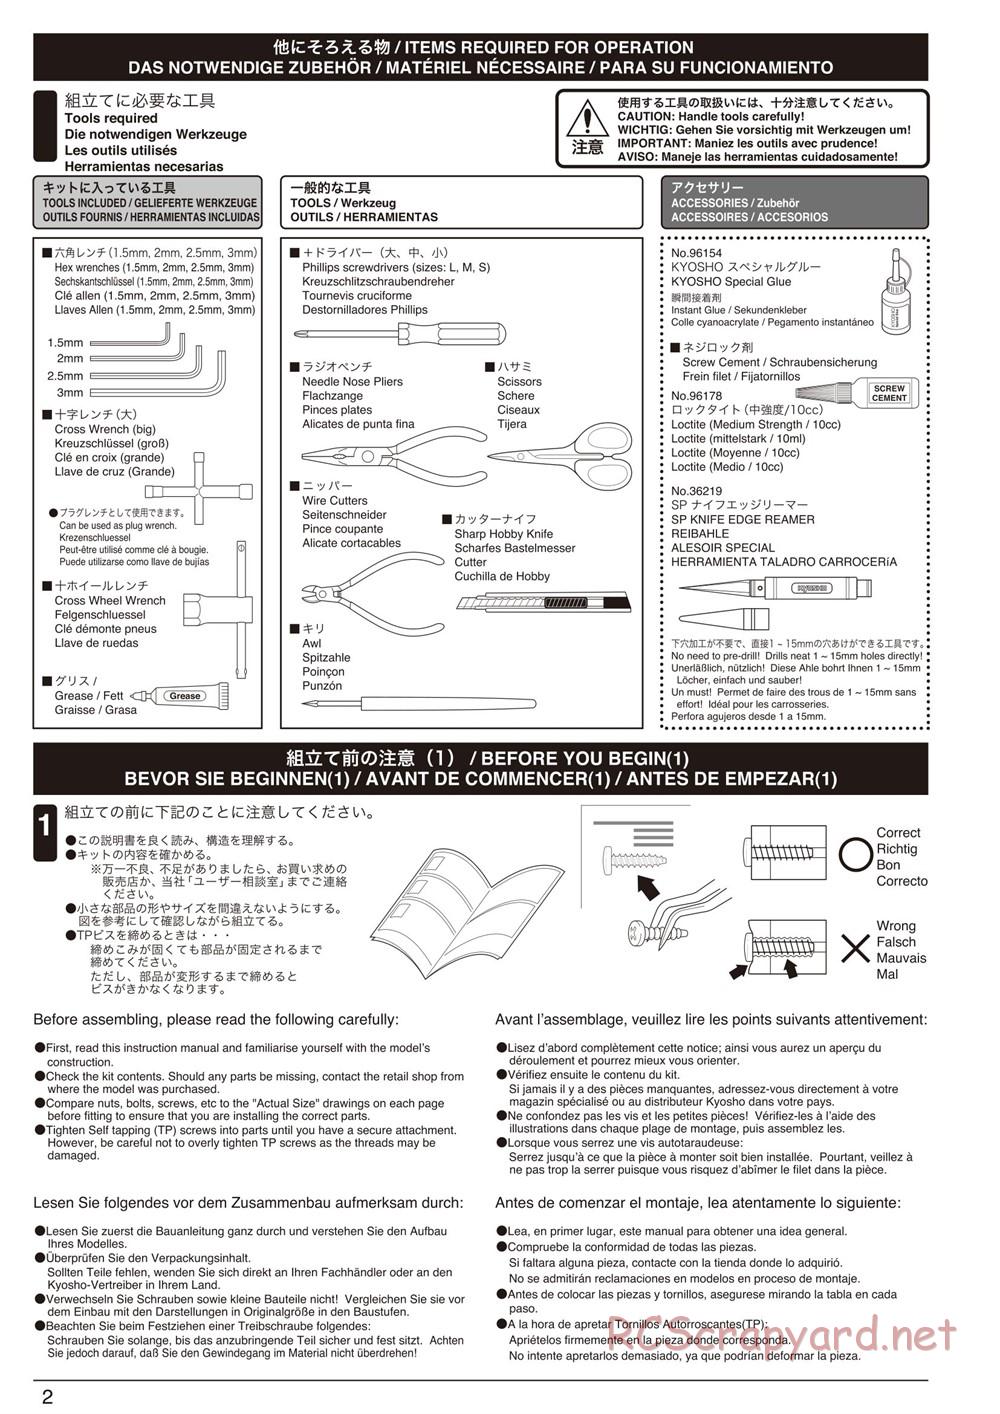 Kyosho - FO-XX GP - Manual - Page 2